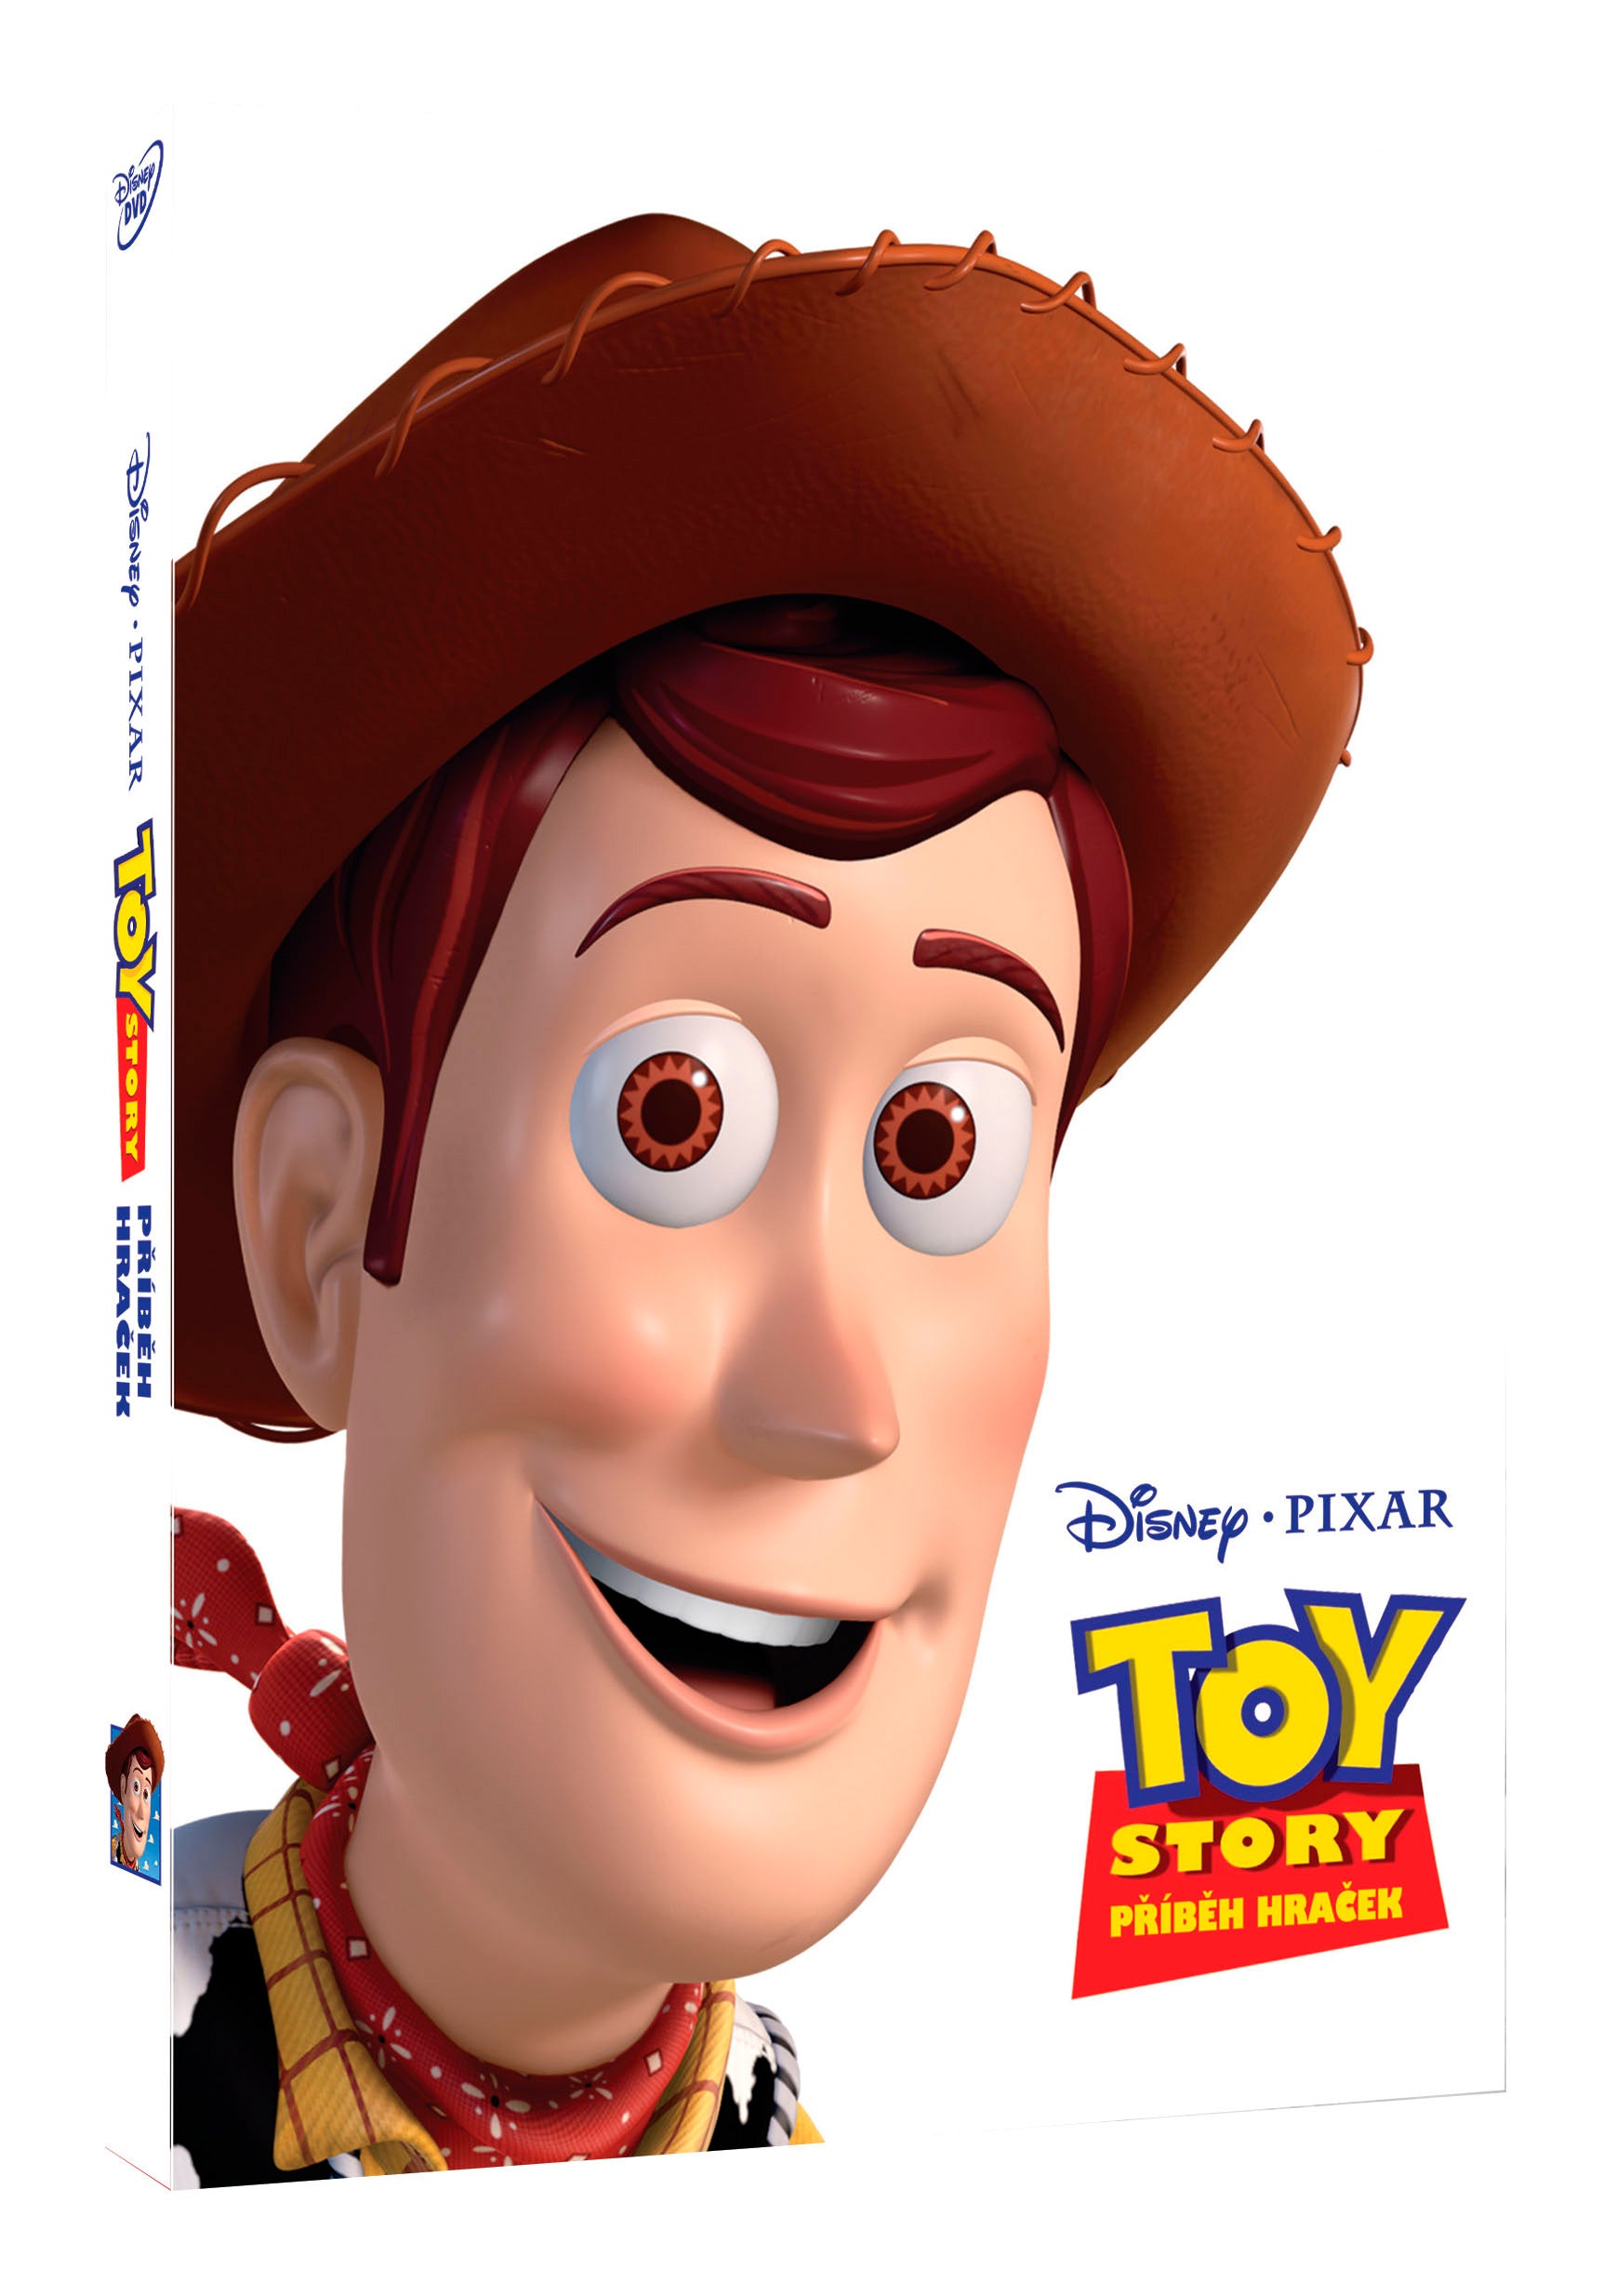 Toy Story: Pribeh hracek SE - Disney Pixar edice (Toy Story Special Edition)